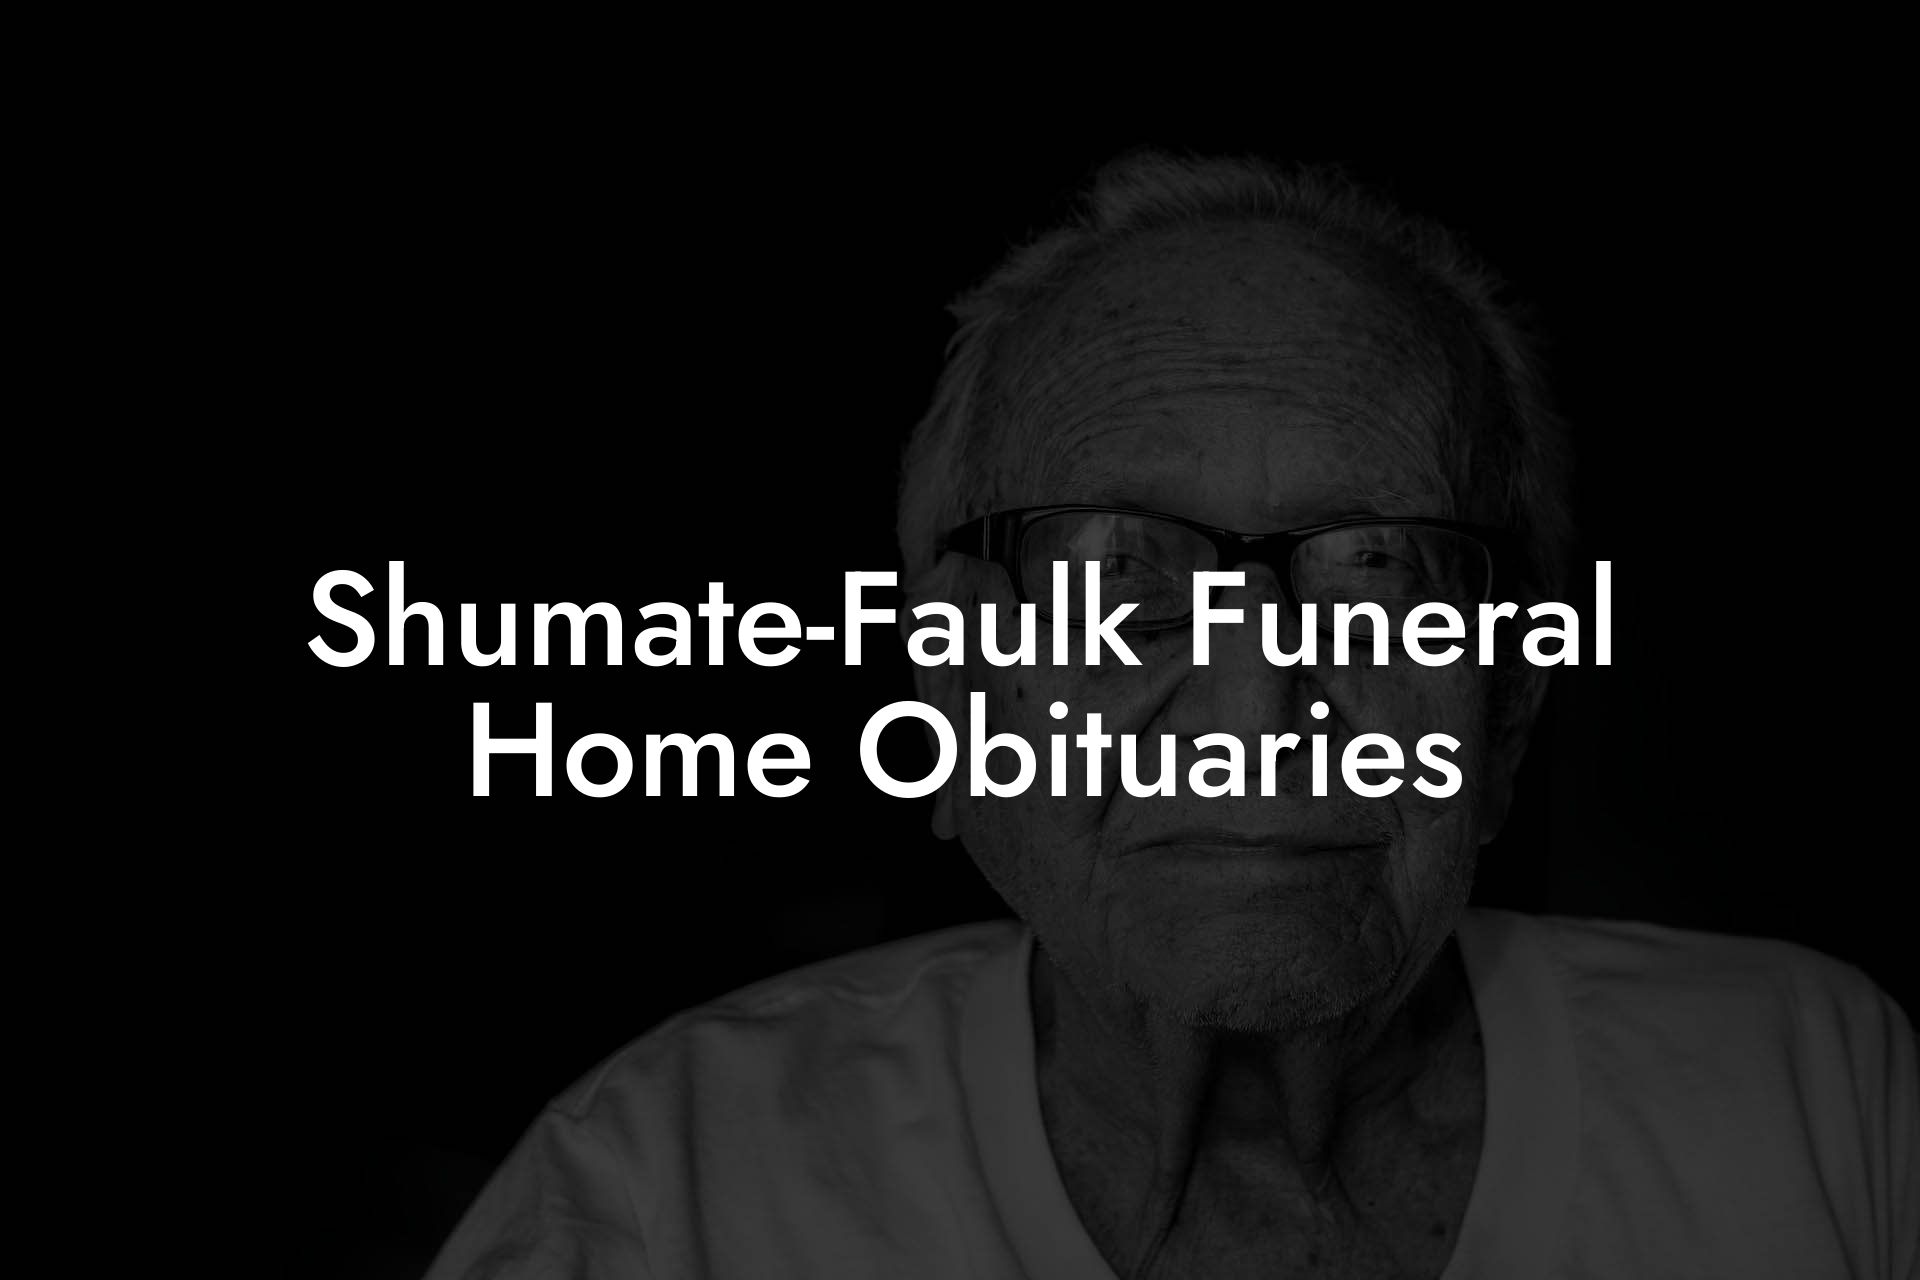 Shumate-Faulk Funeral Home Obituaries